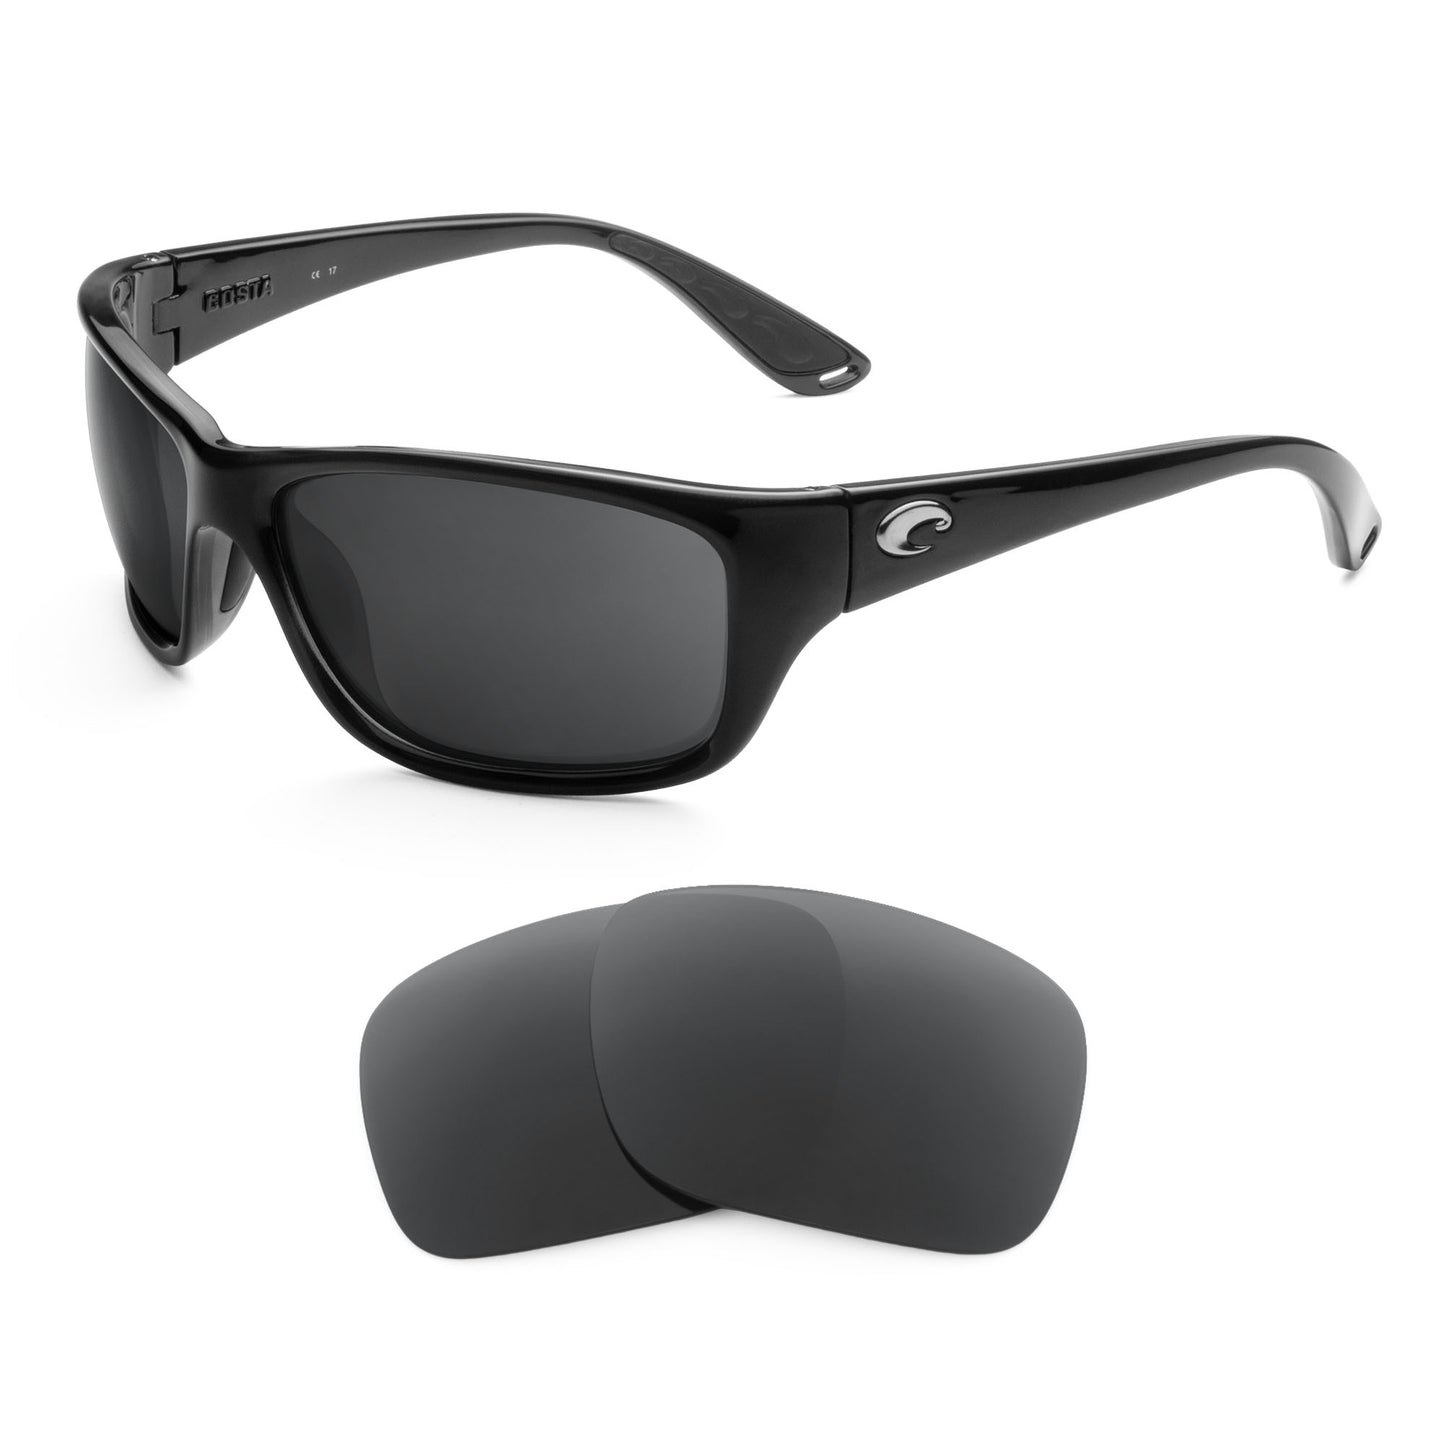 Costa Tasman Sea sunglasses with replacement lenses